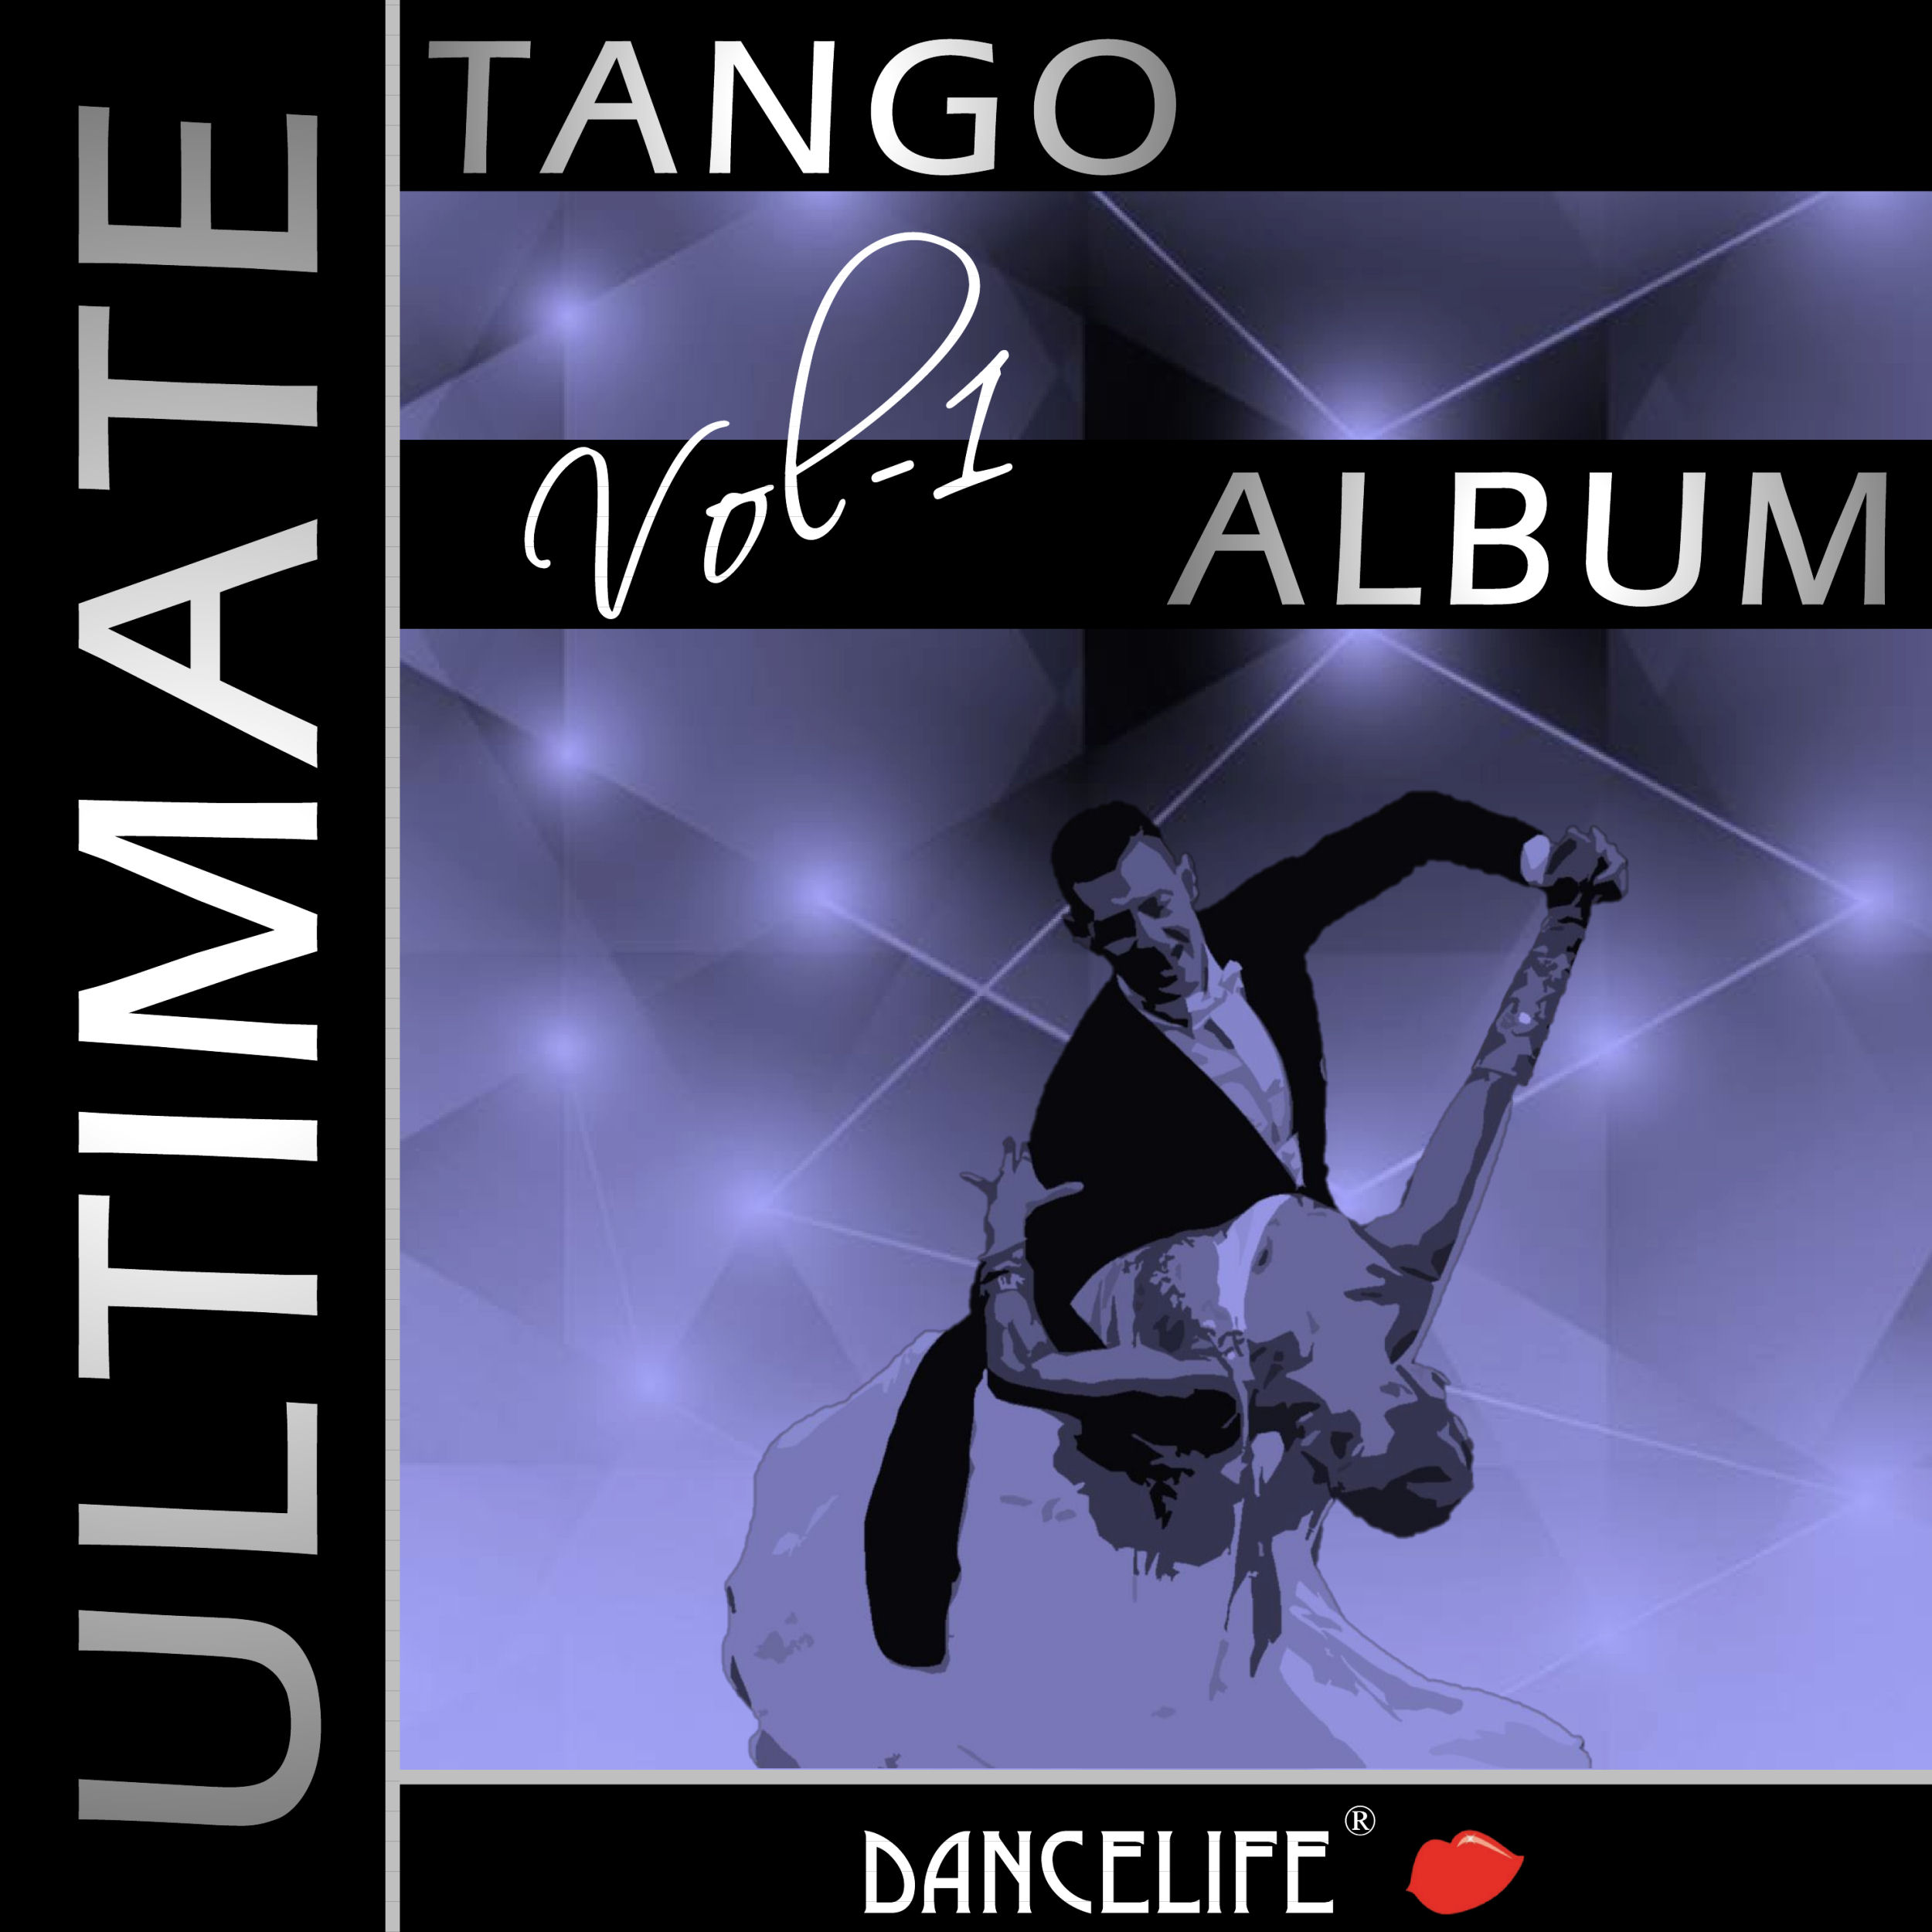 Dancelife presents: The Ultimate Tango Album, Vol. 1